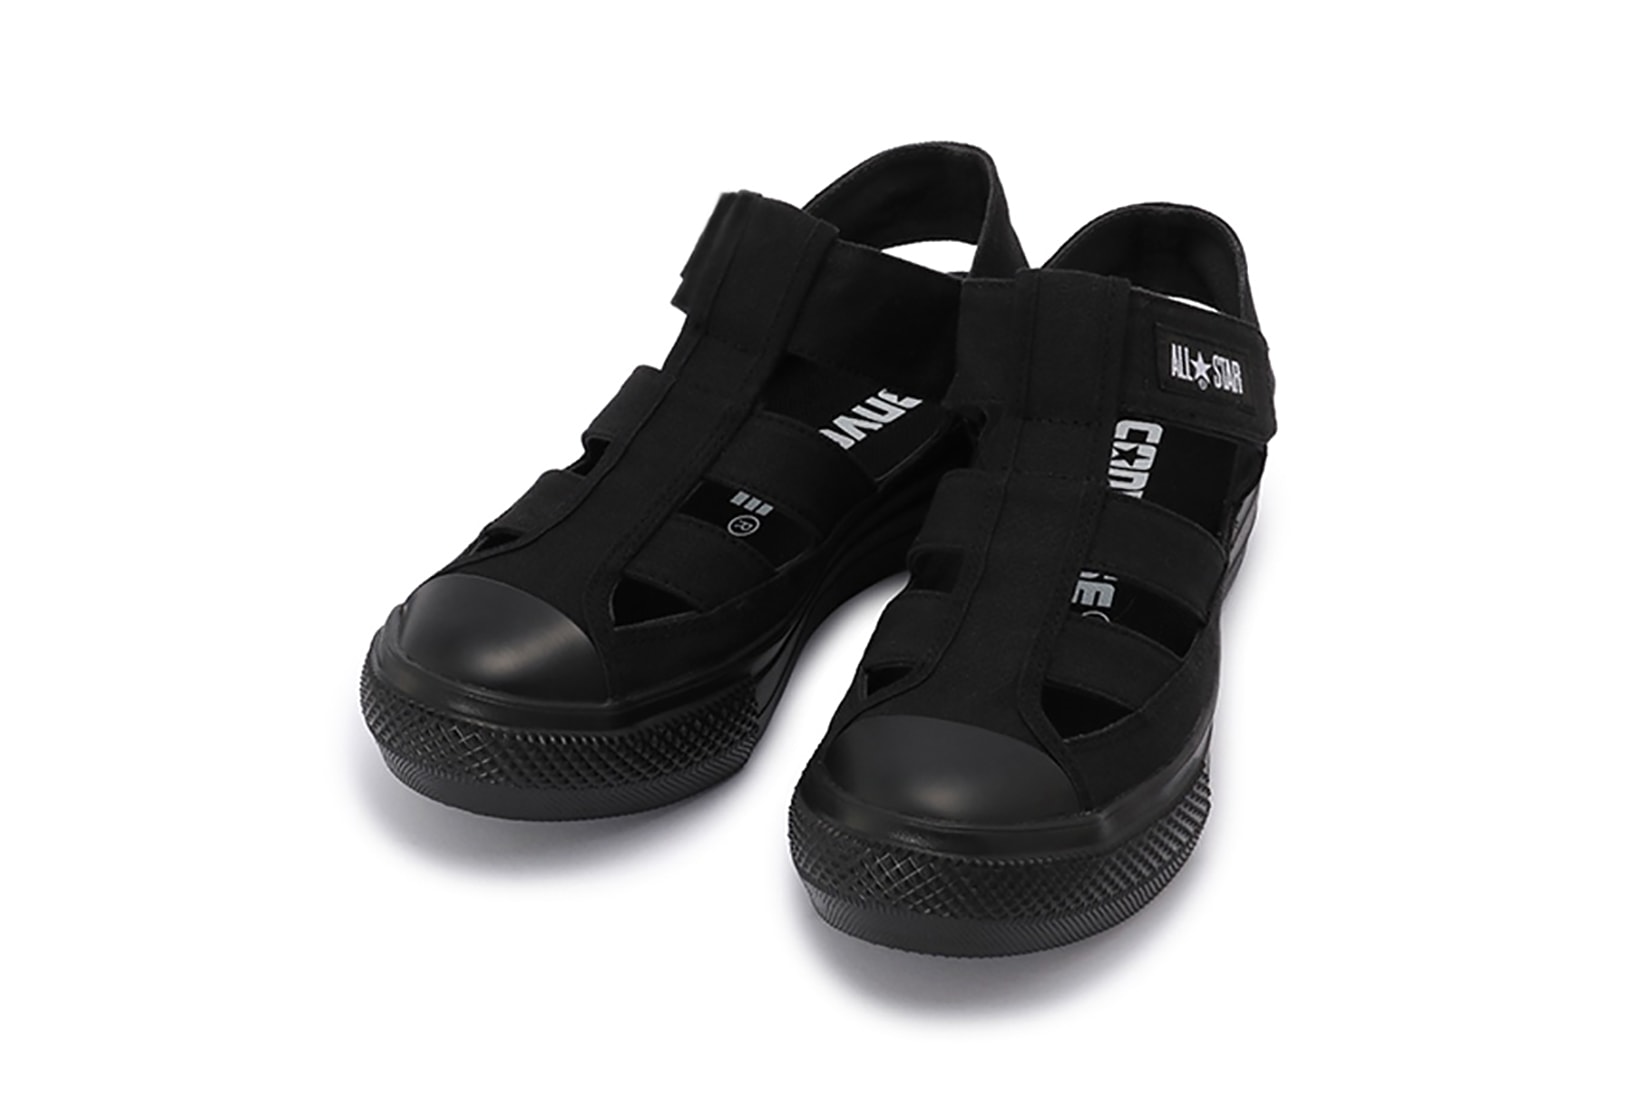 converse all star light plts gladiator ox sneakers sandals beige black footwear sneakerhead shoes 